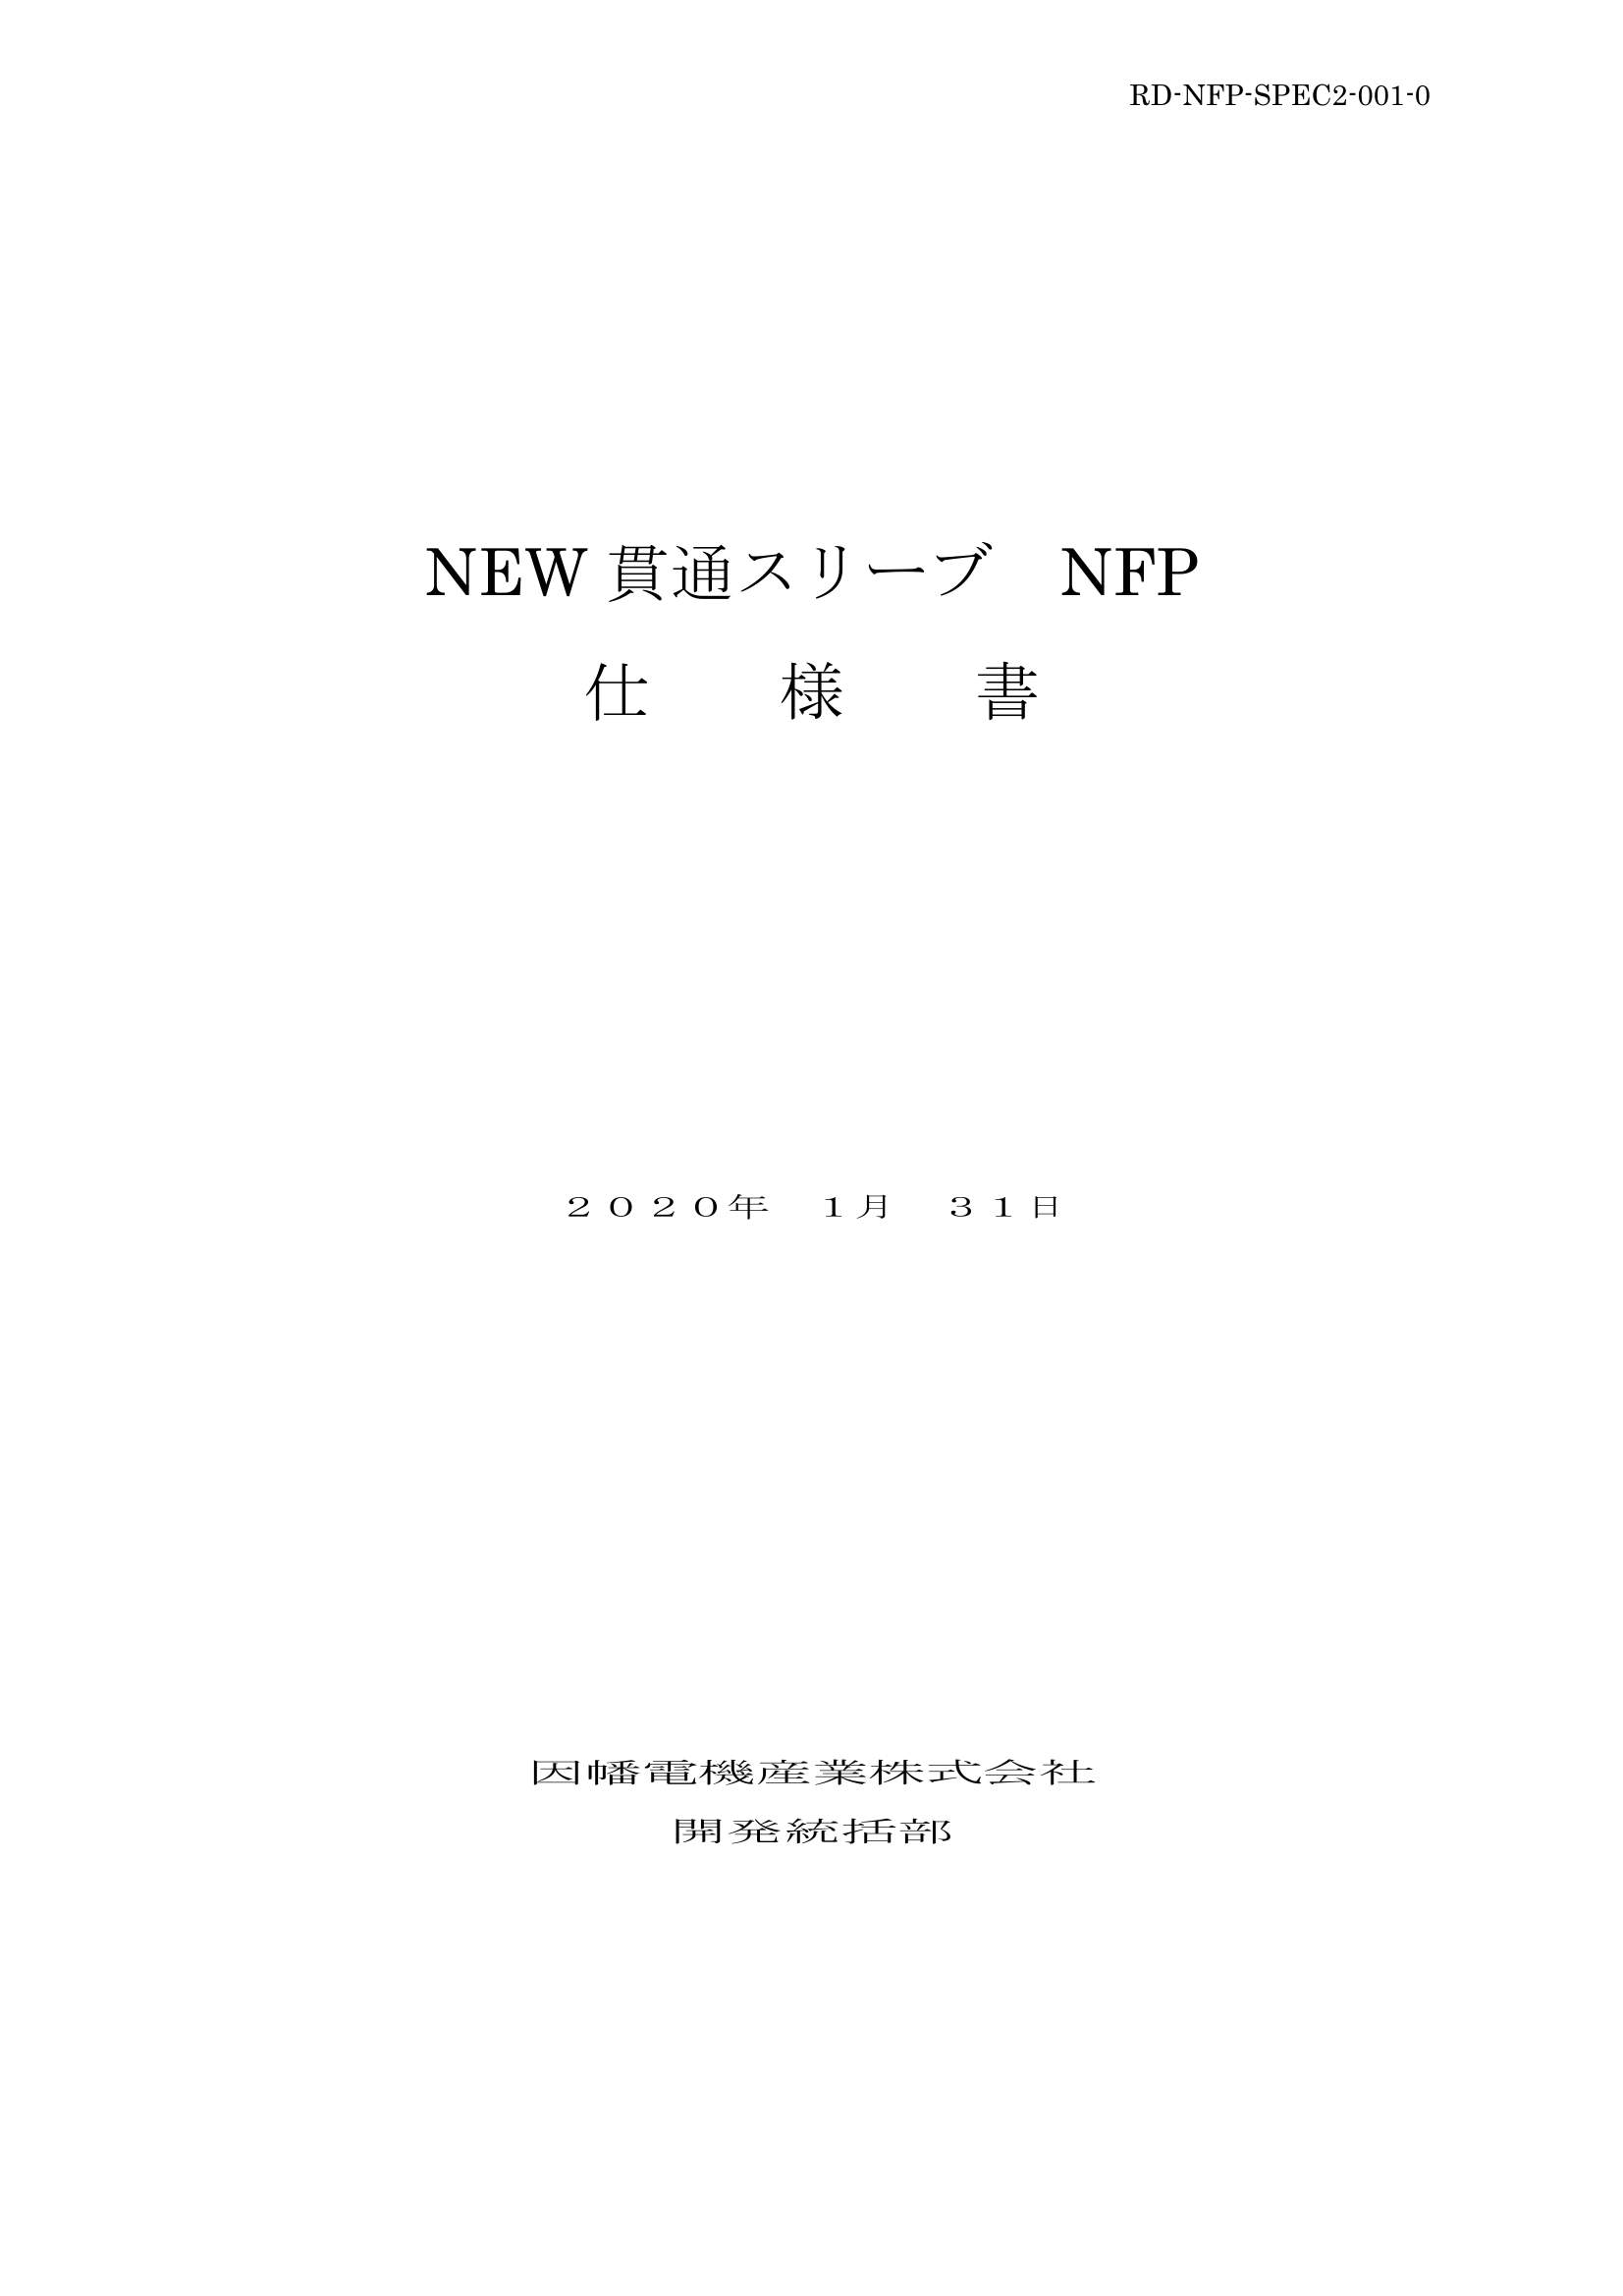 NFP_仕様書_20200131.pdf